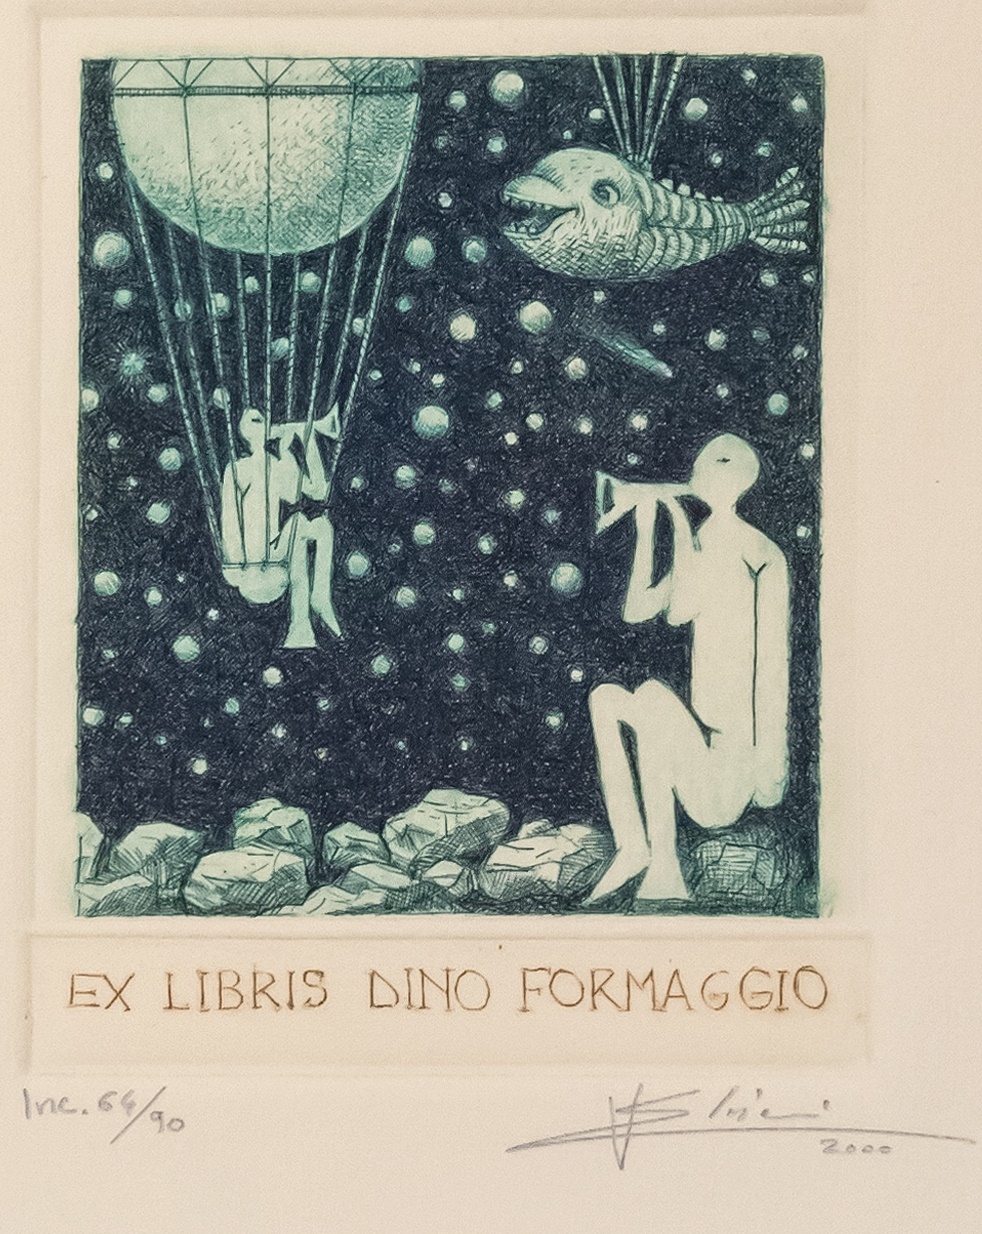 Exlibris Dino Formaggio